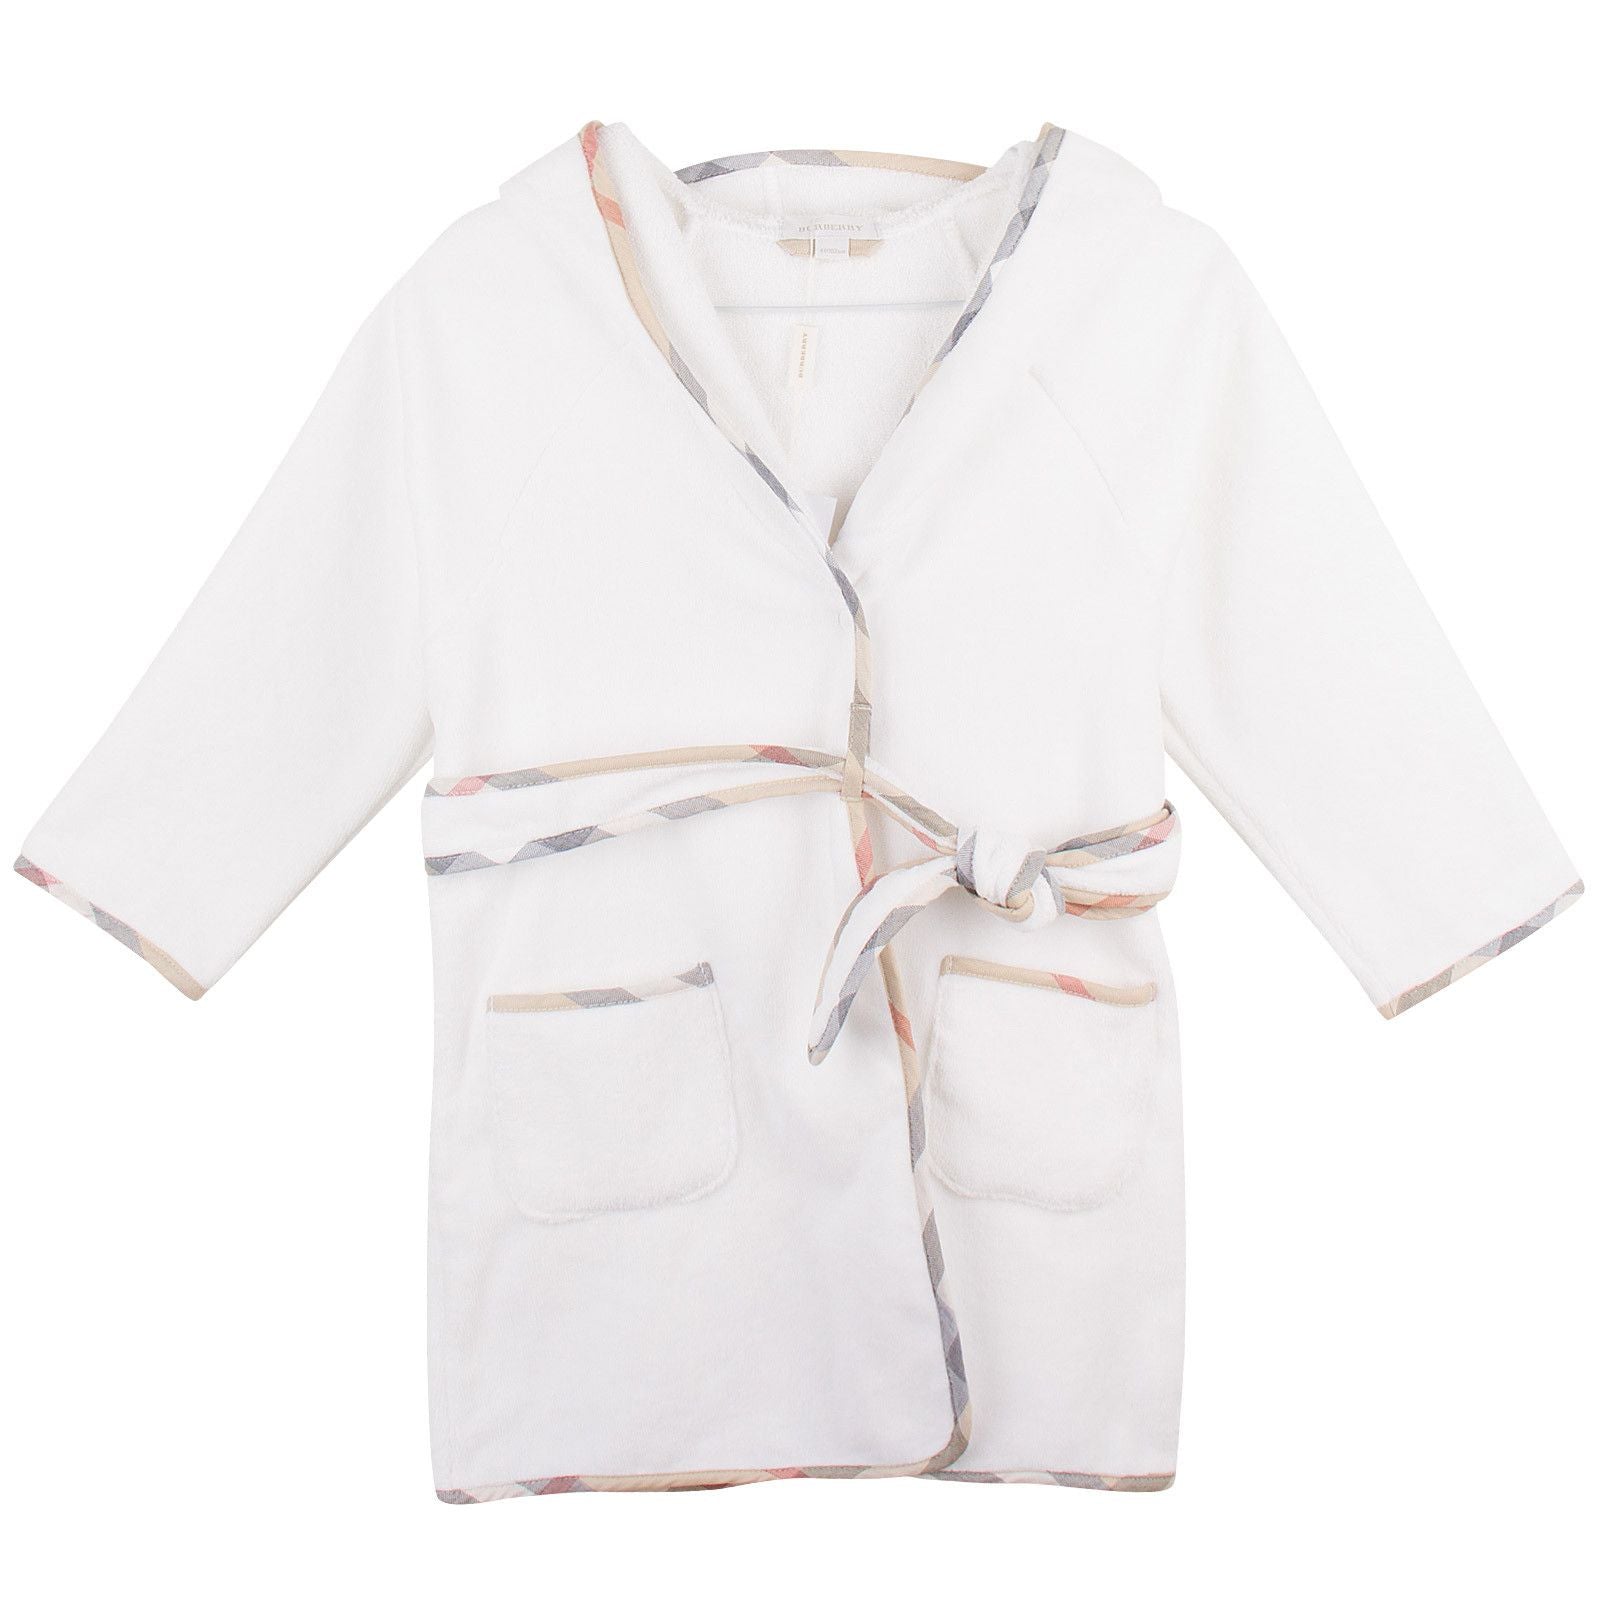 Baby White Two Pockets Cotton Bathrobe With Classic Check Trims - CÉMAROSE | Children's Fashion Store - 1